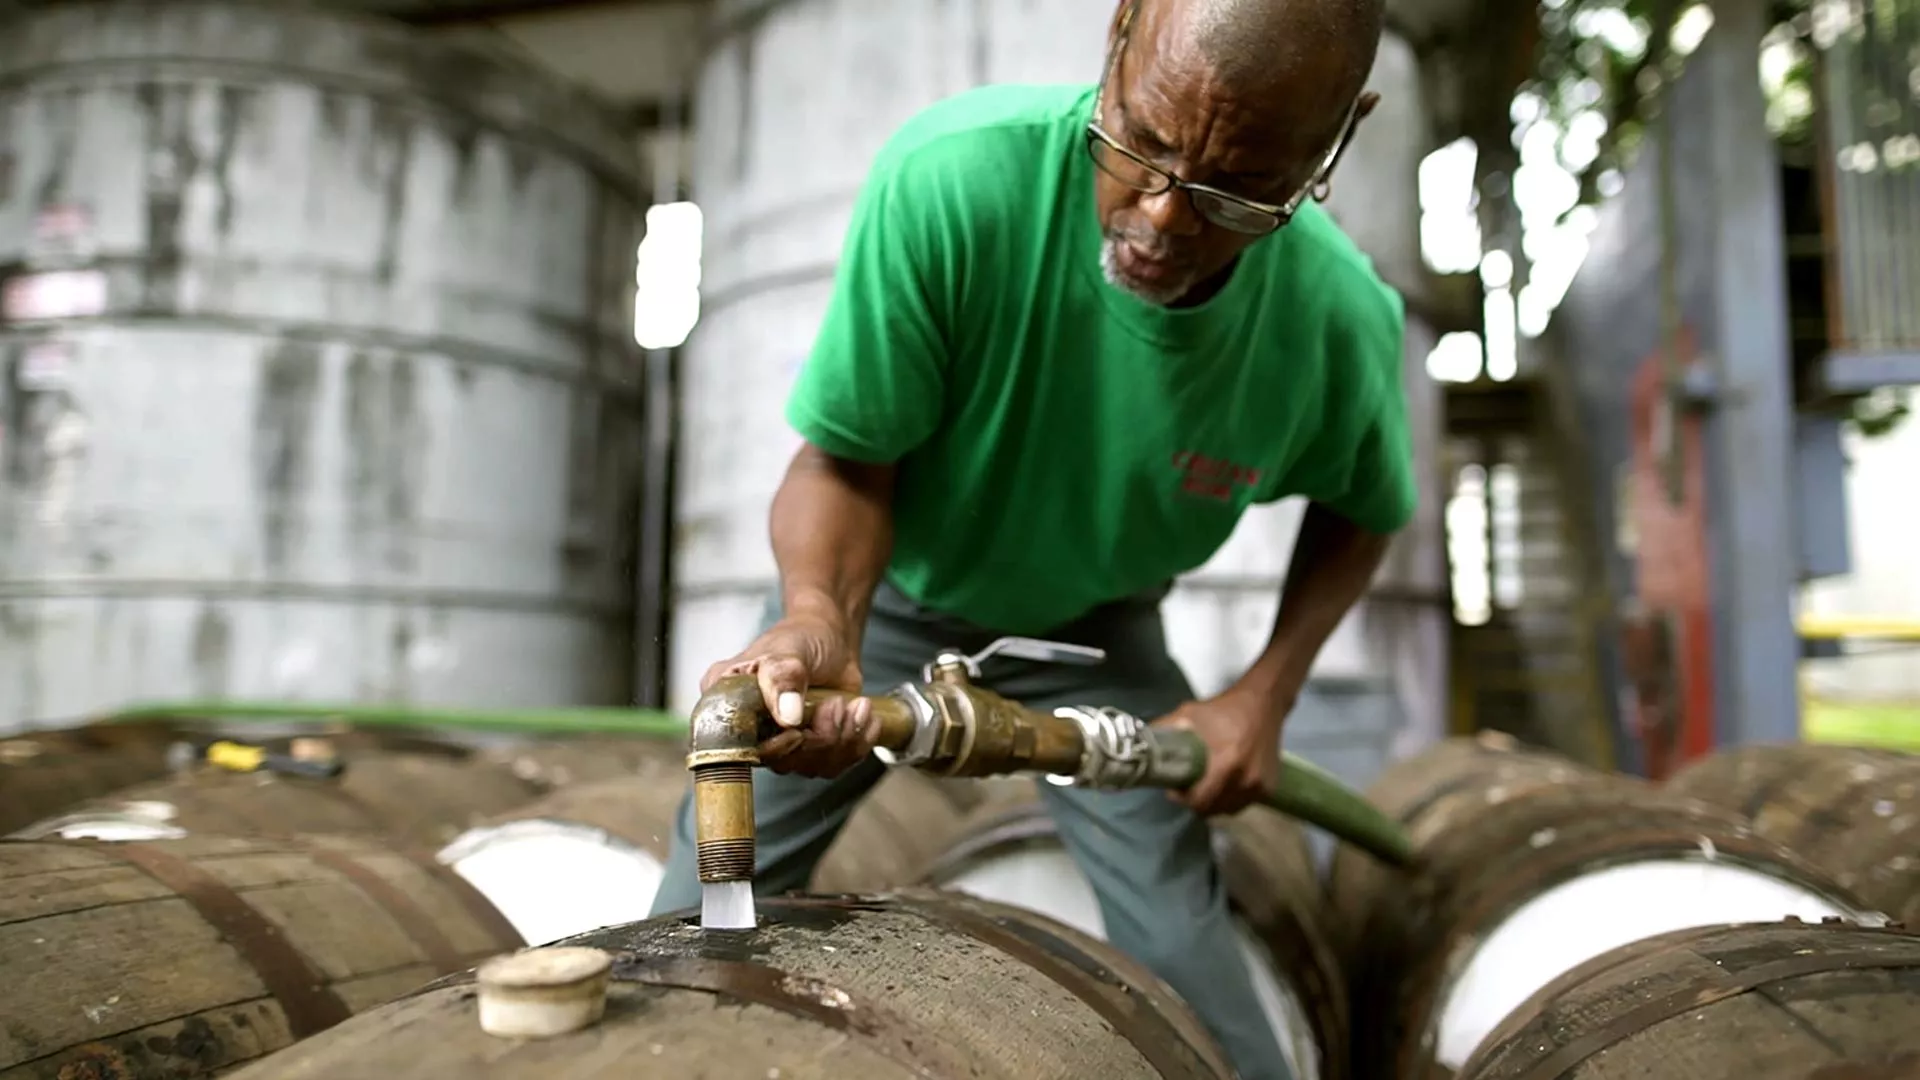 Cruzan® employee preparing oak barrels and casks to make Cruzan® Rum.